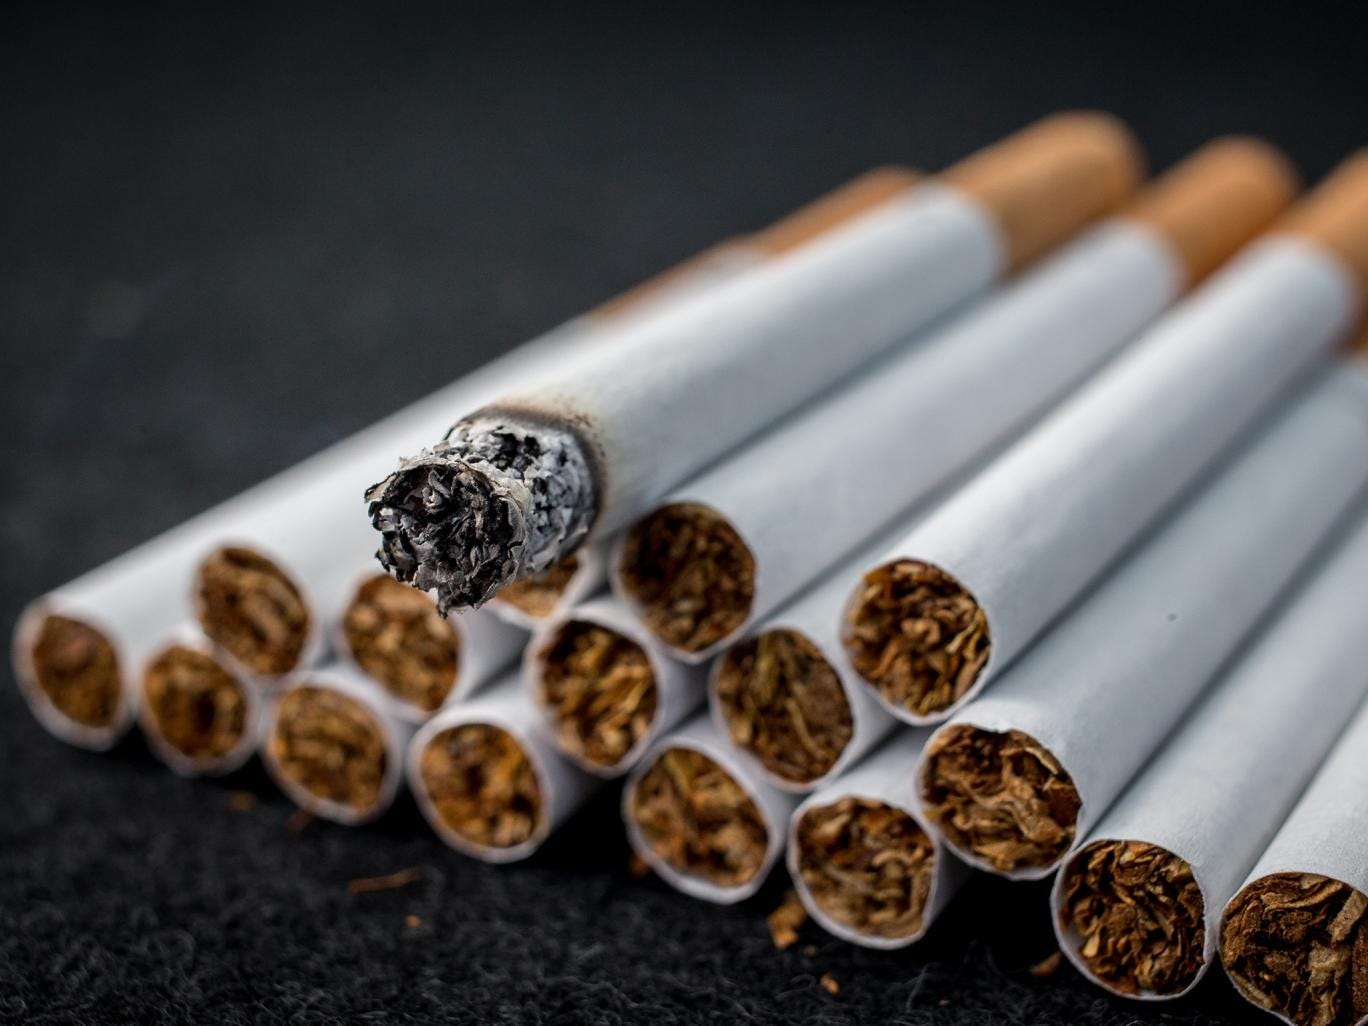 British American Tobacco paid union to disrupt